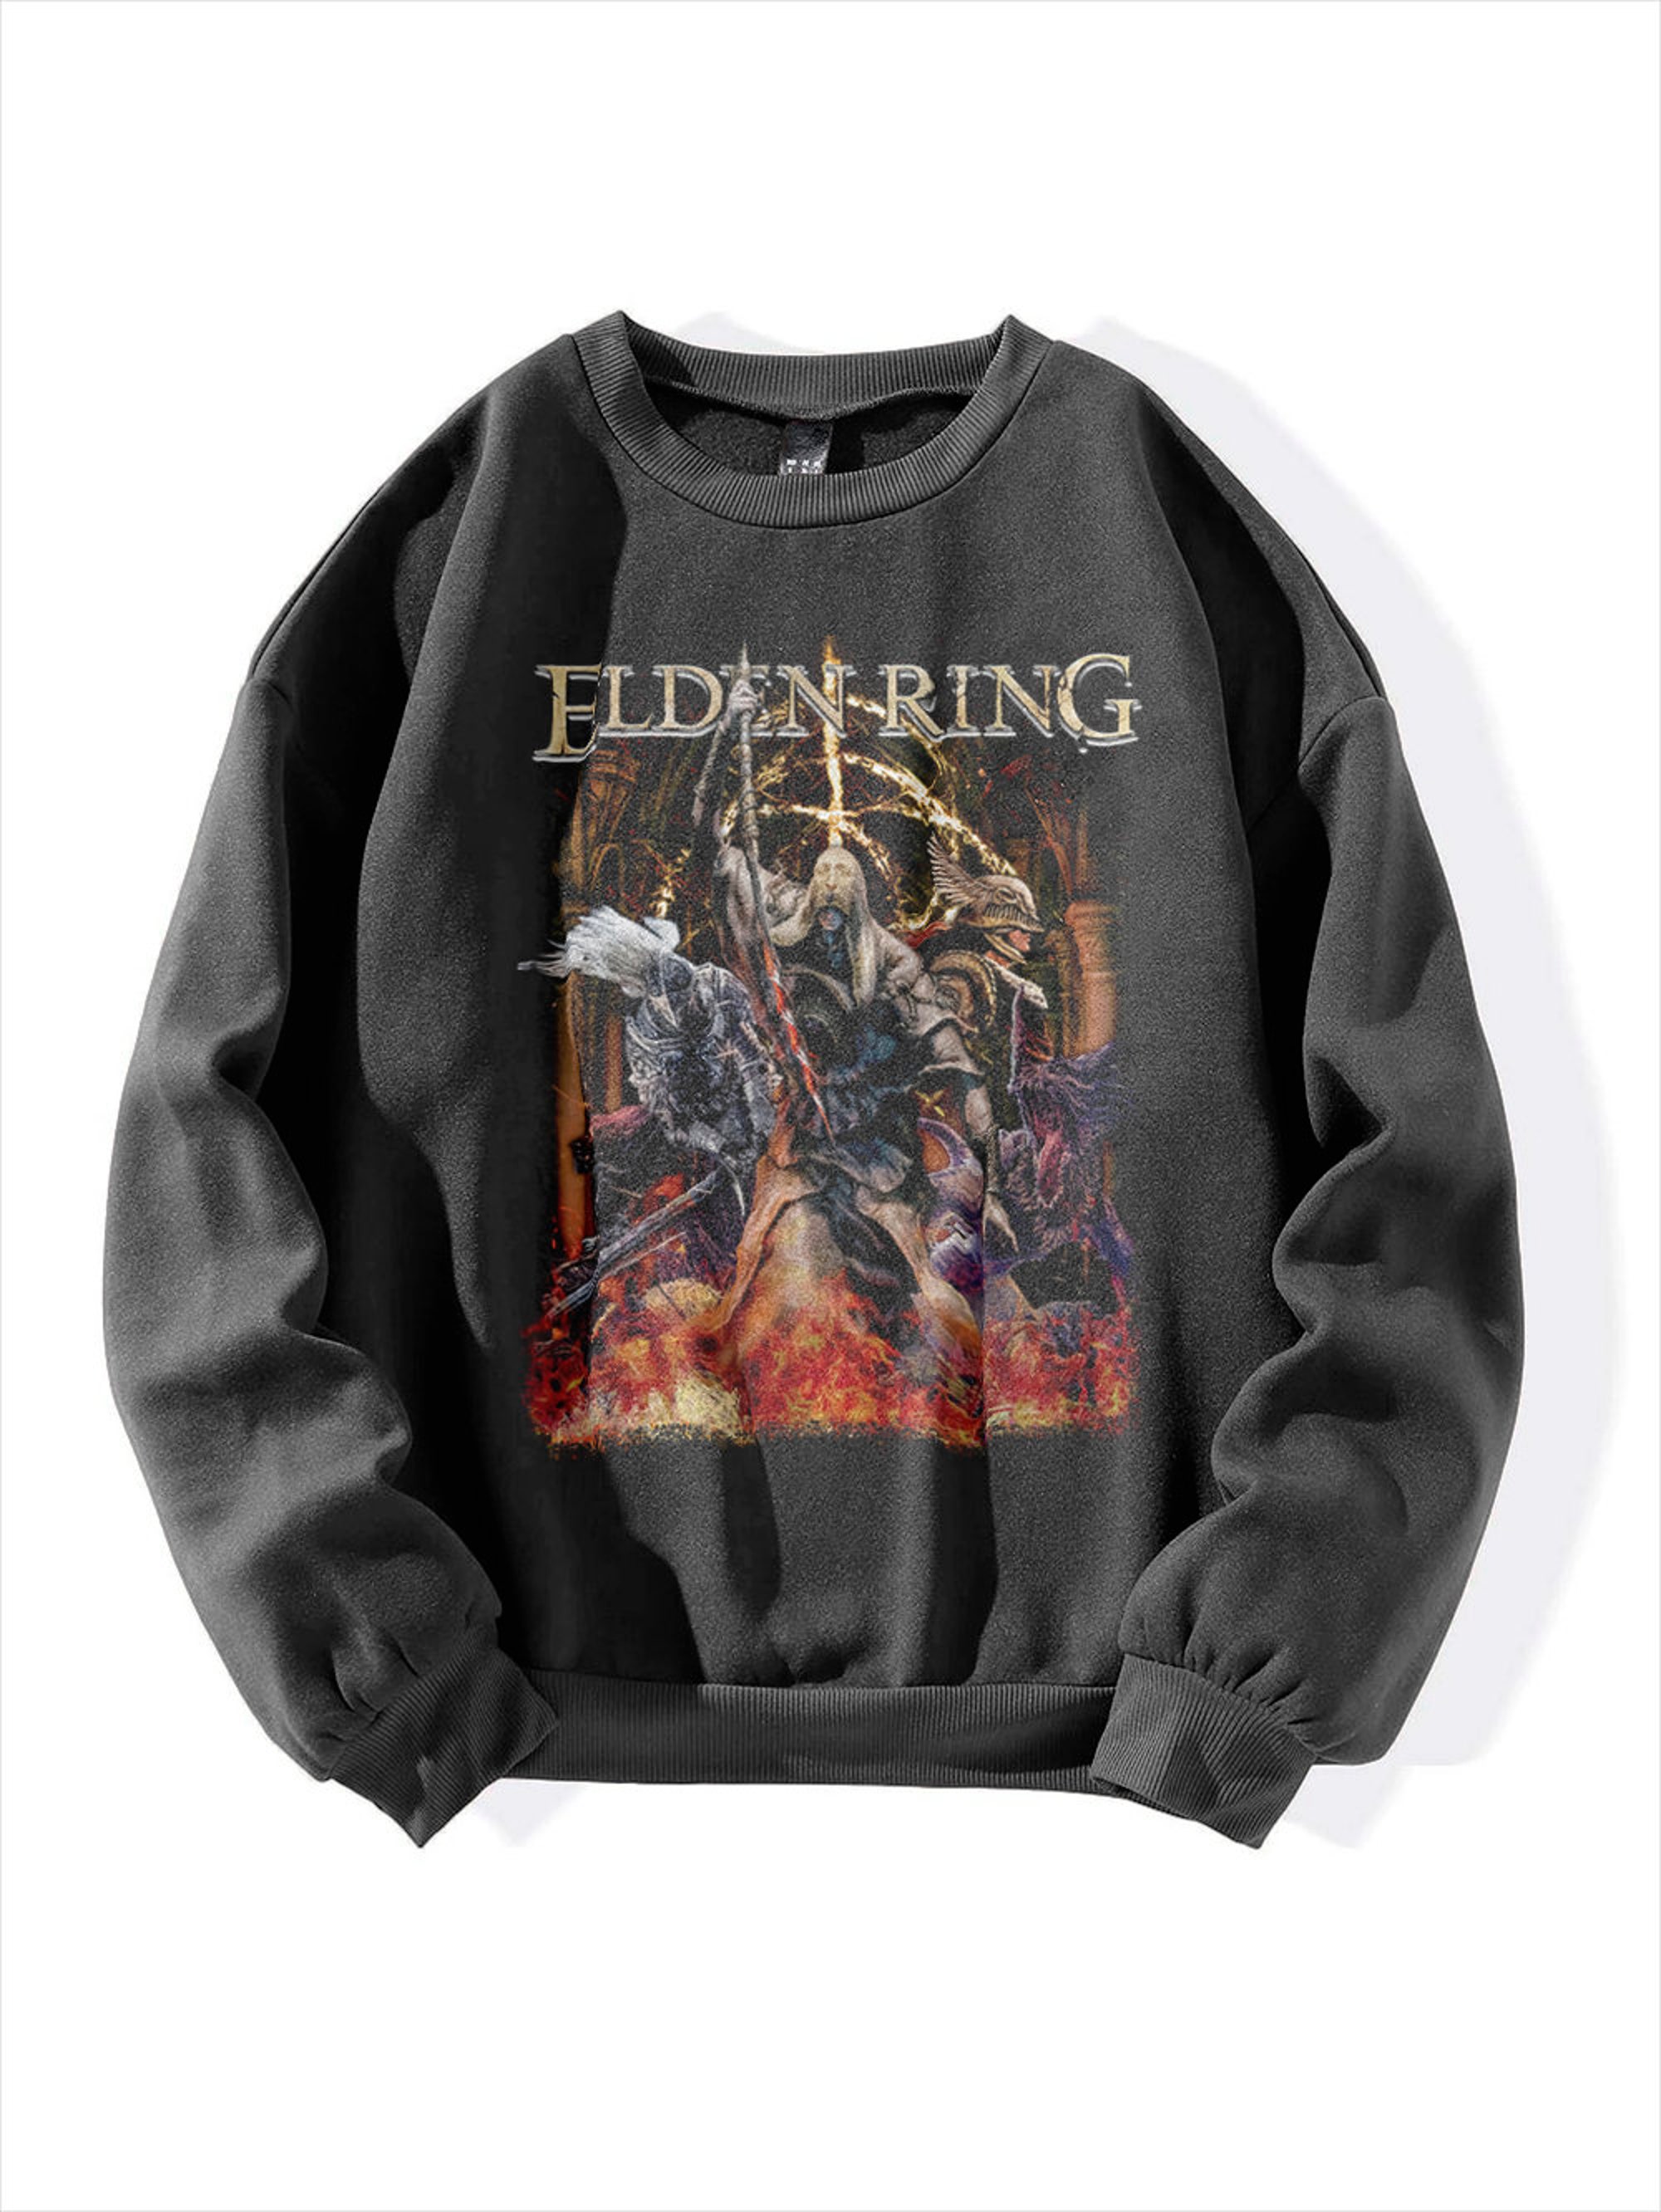 Discover Elden Ring Tshirt, Elden Ring Shirt, Video Game Tee, Clothing Design